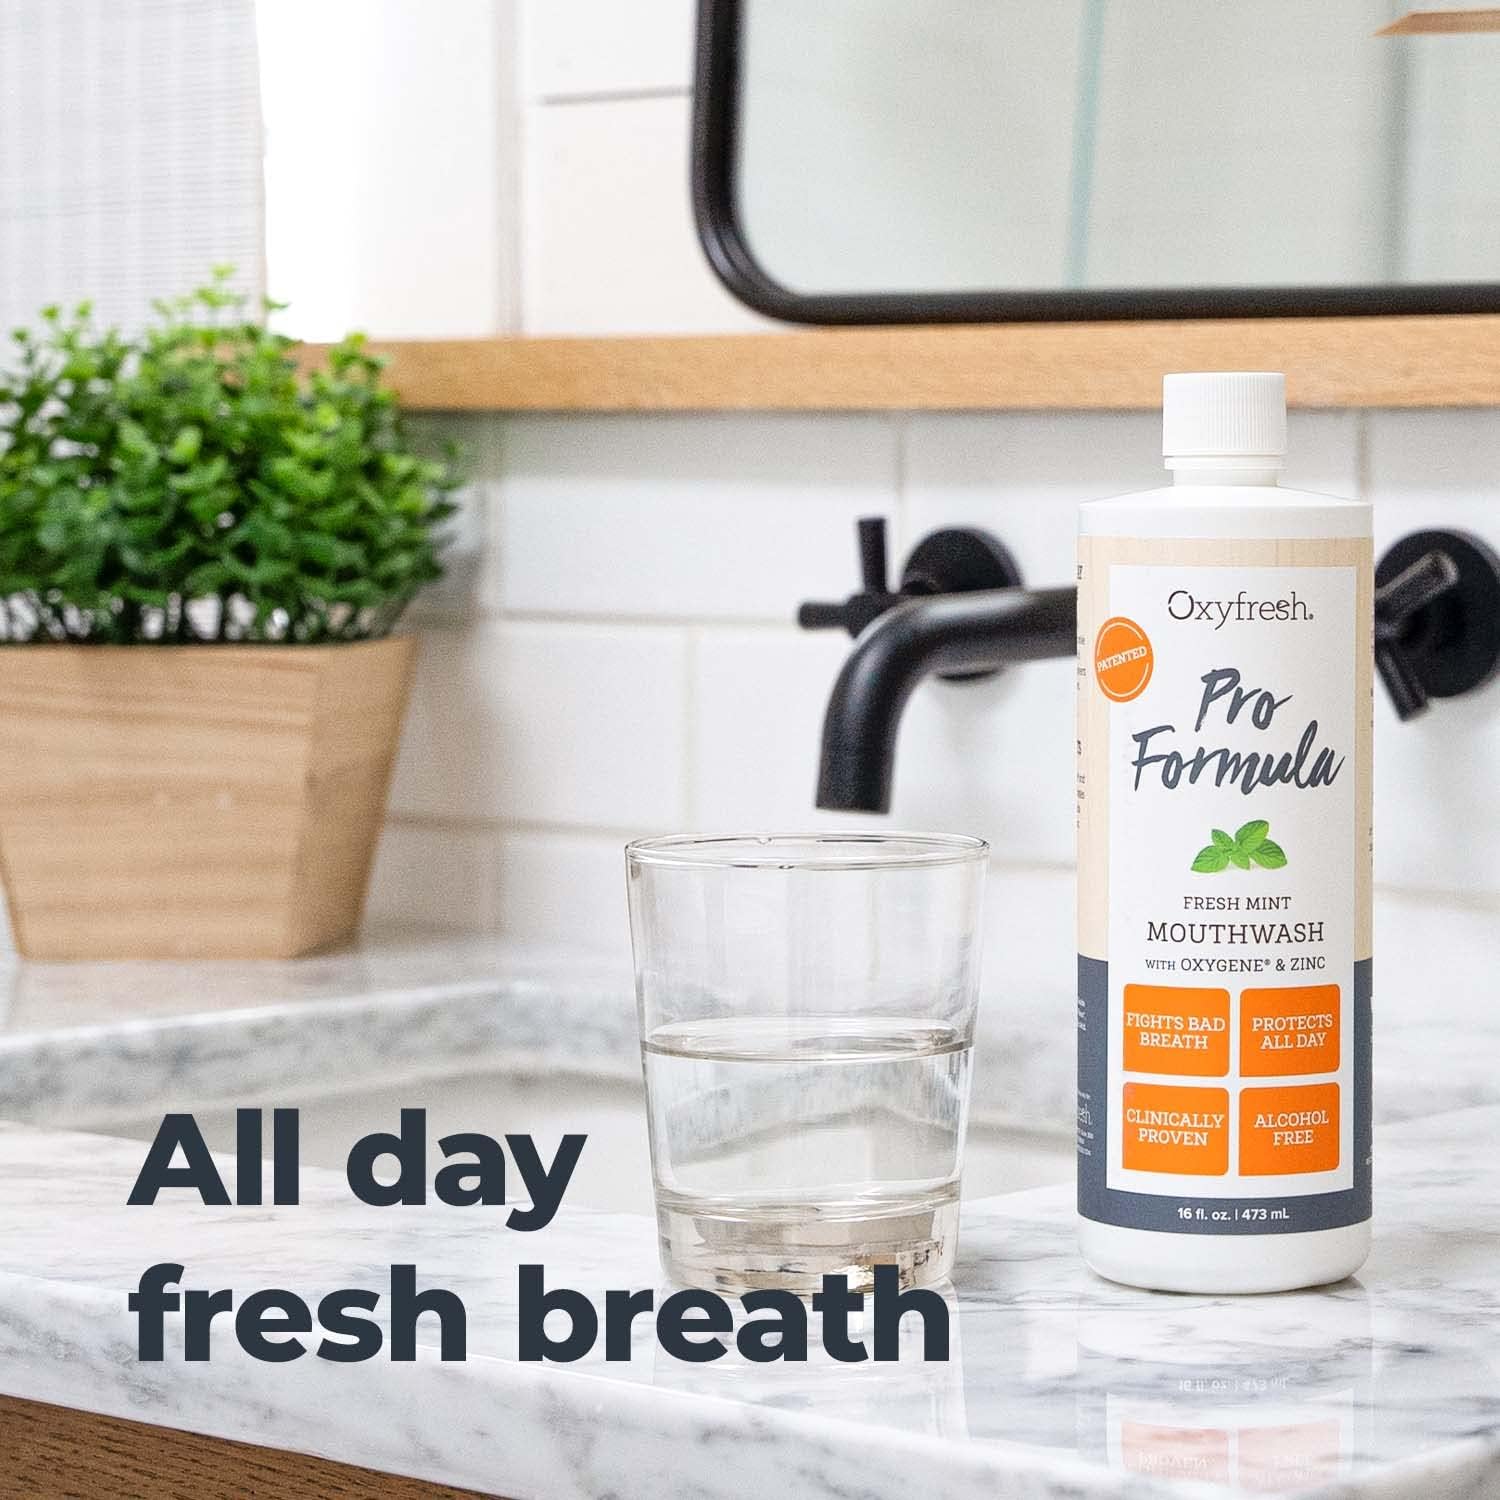 Oxyfresh Pro Formula Fresh Mint Mouthwash – Patented Zinc Mouthwash for Fresh Breath & Healthy Gums | Dye, Fluoride & Alcohol Free Mouthwash (1 Gal Bottle) : Health & Household